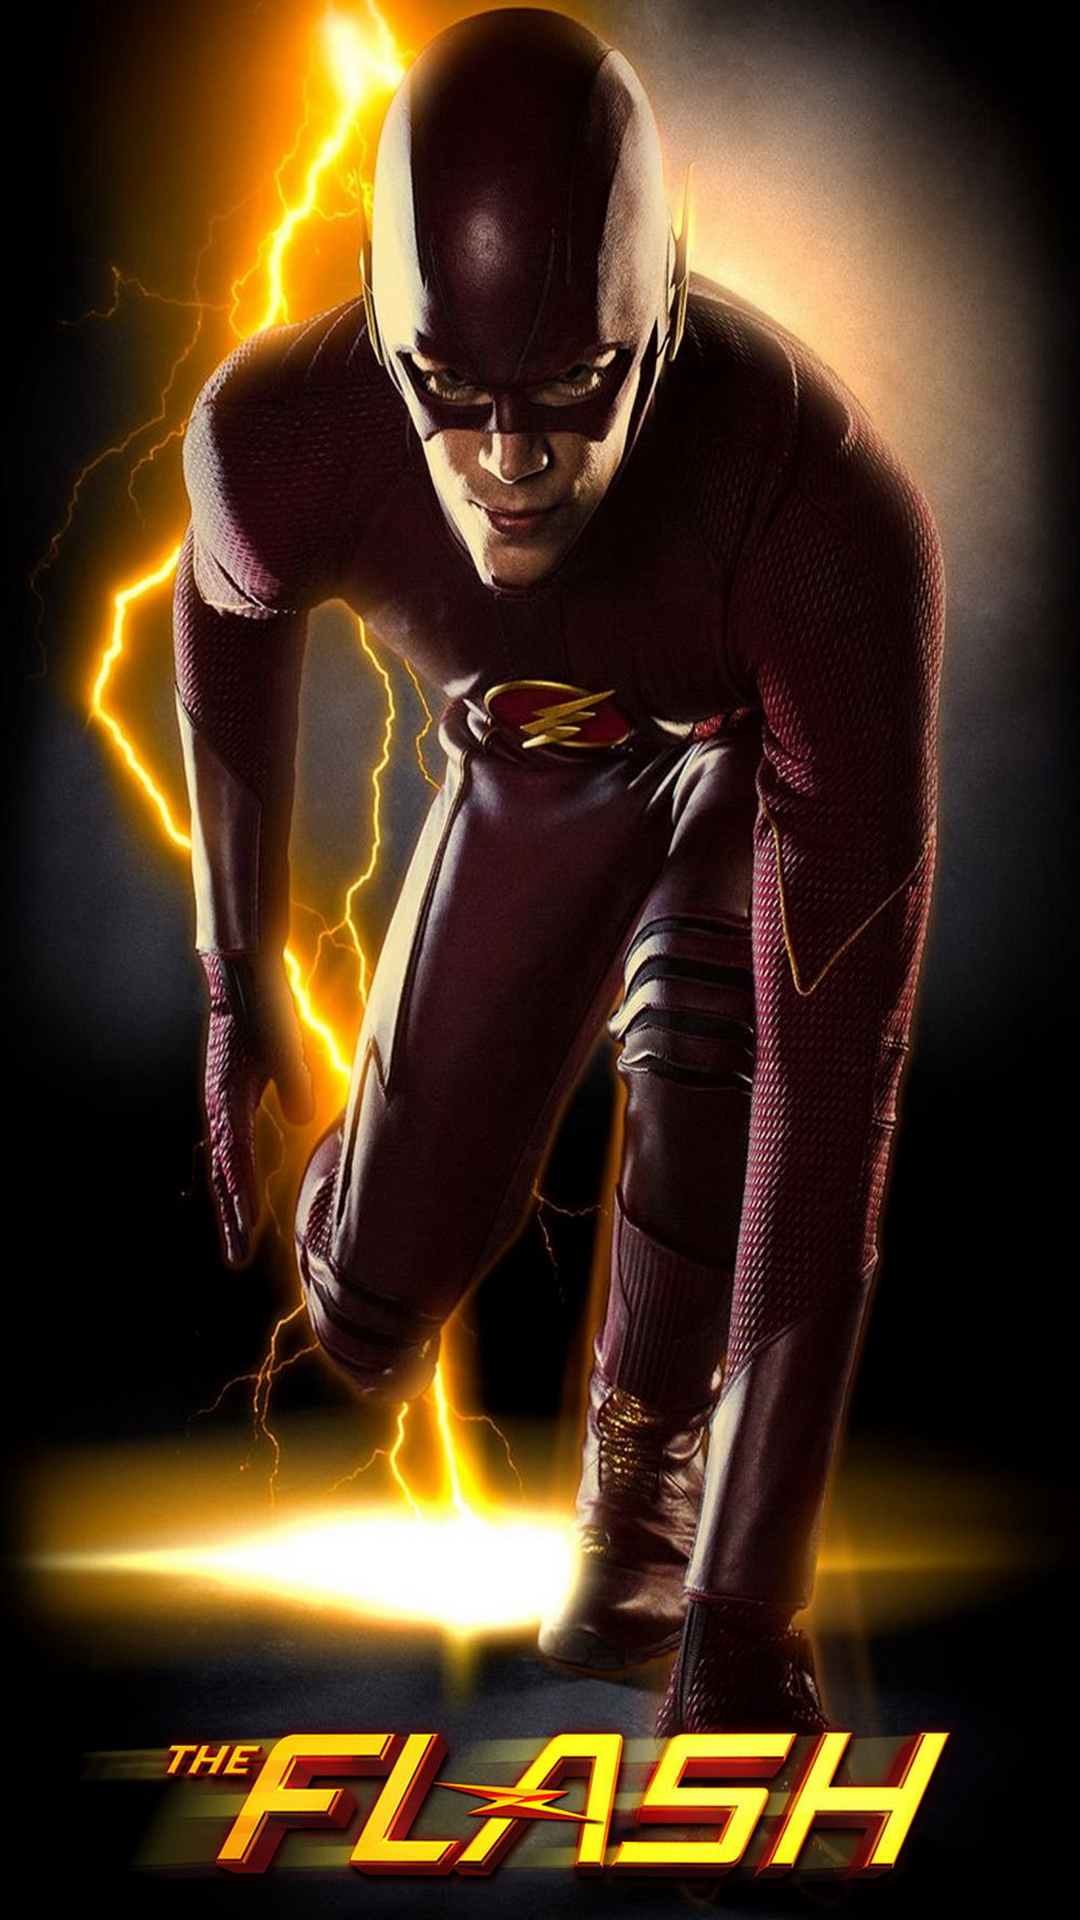 the flash iphone wallpaper,fictional character,flash,superhero,poster,batman